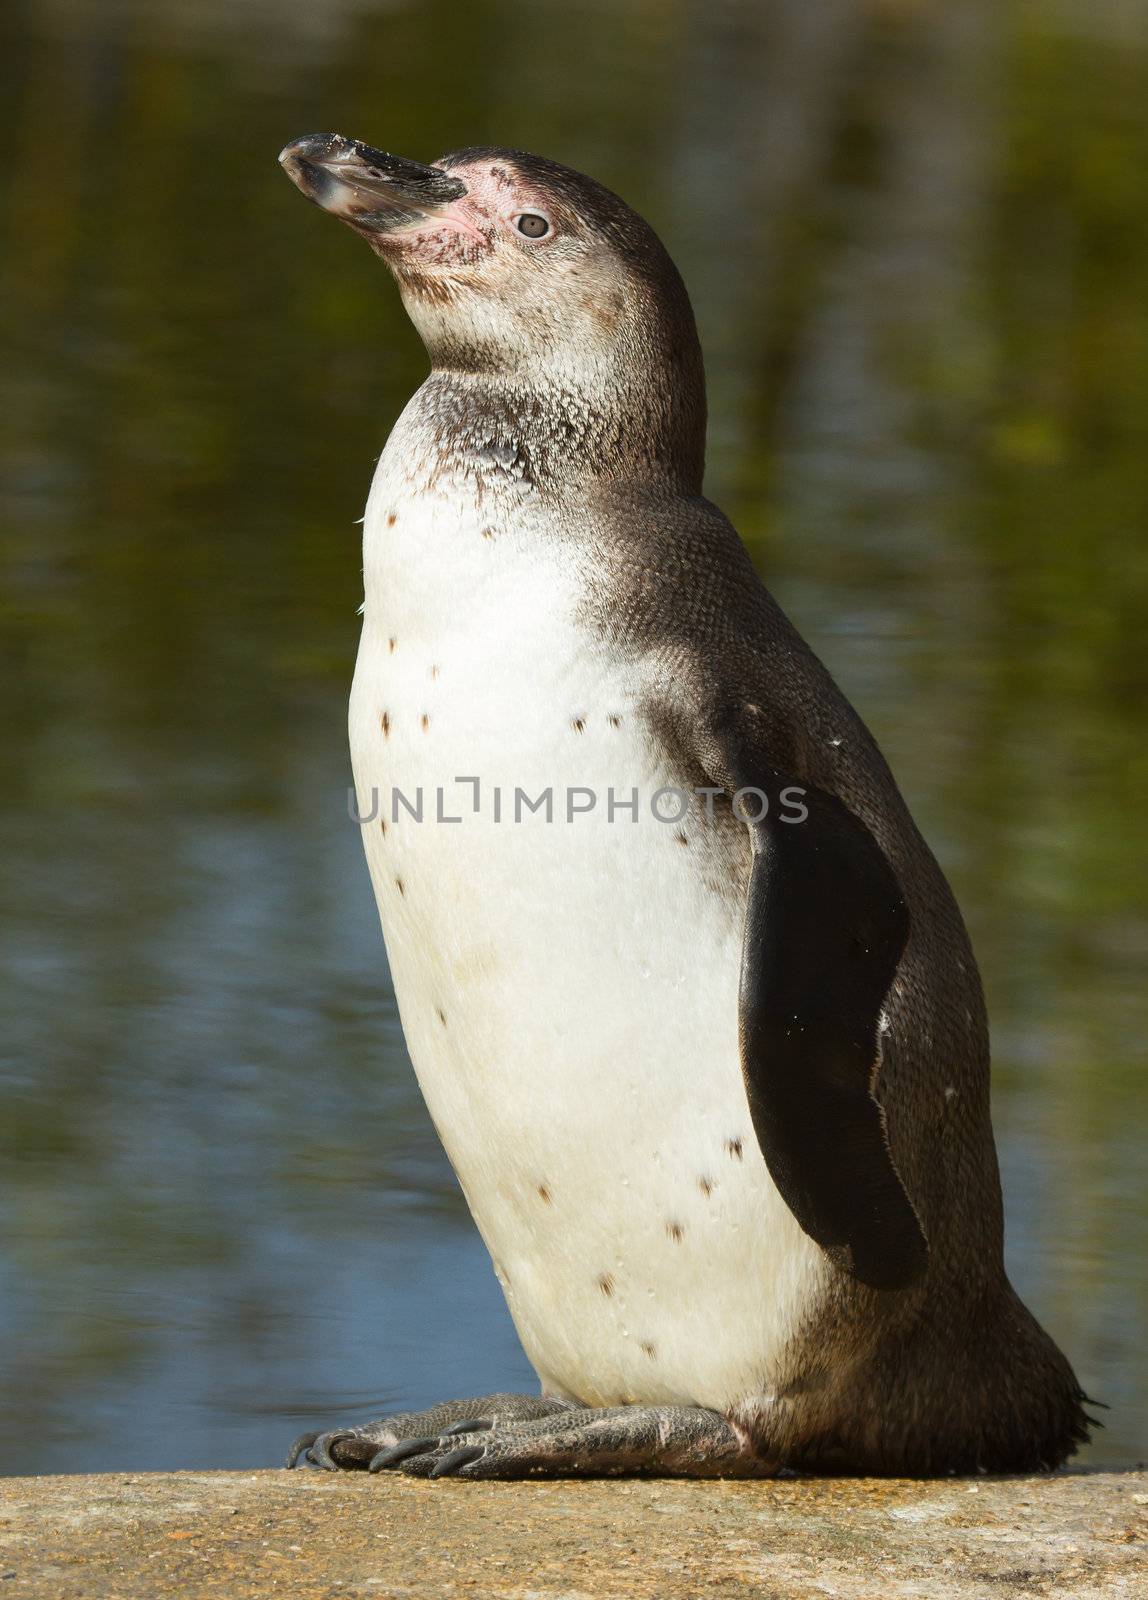 A Humboldt penguin by michaklootwijk